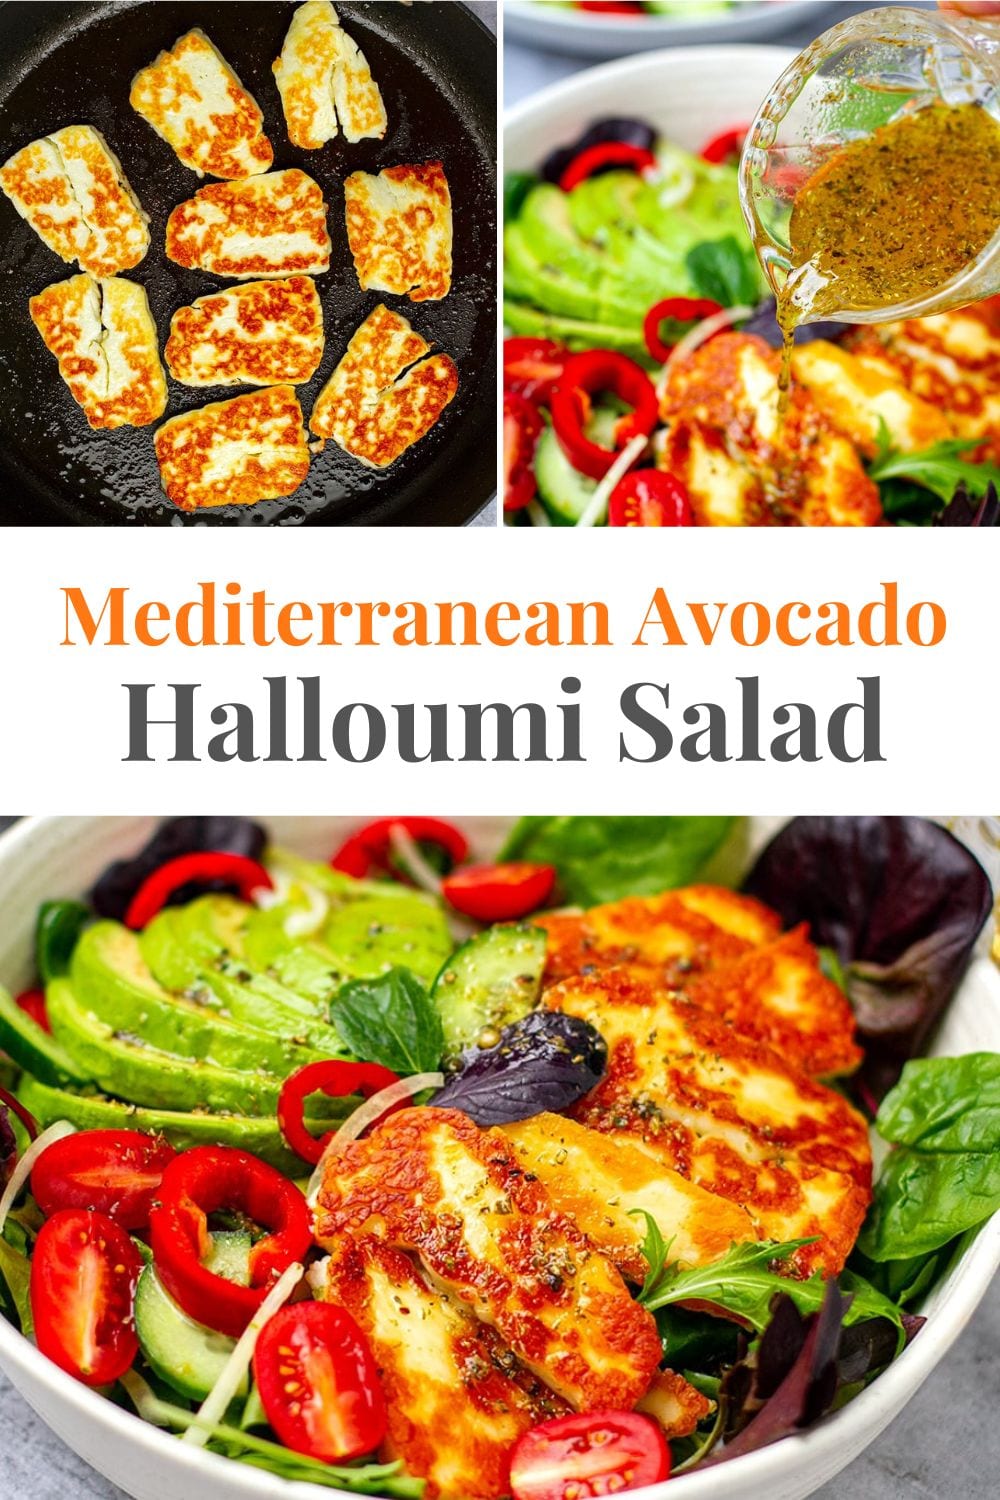 Avocado Halloumi Salad With Mediterranean Dressing